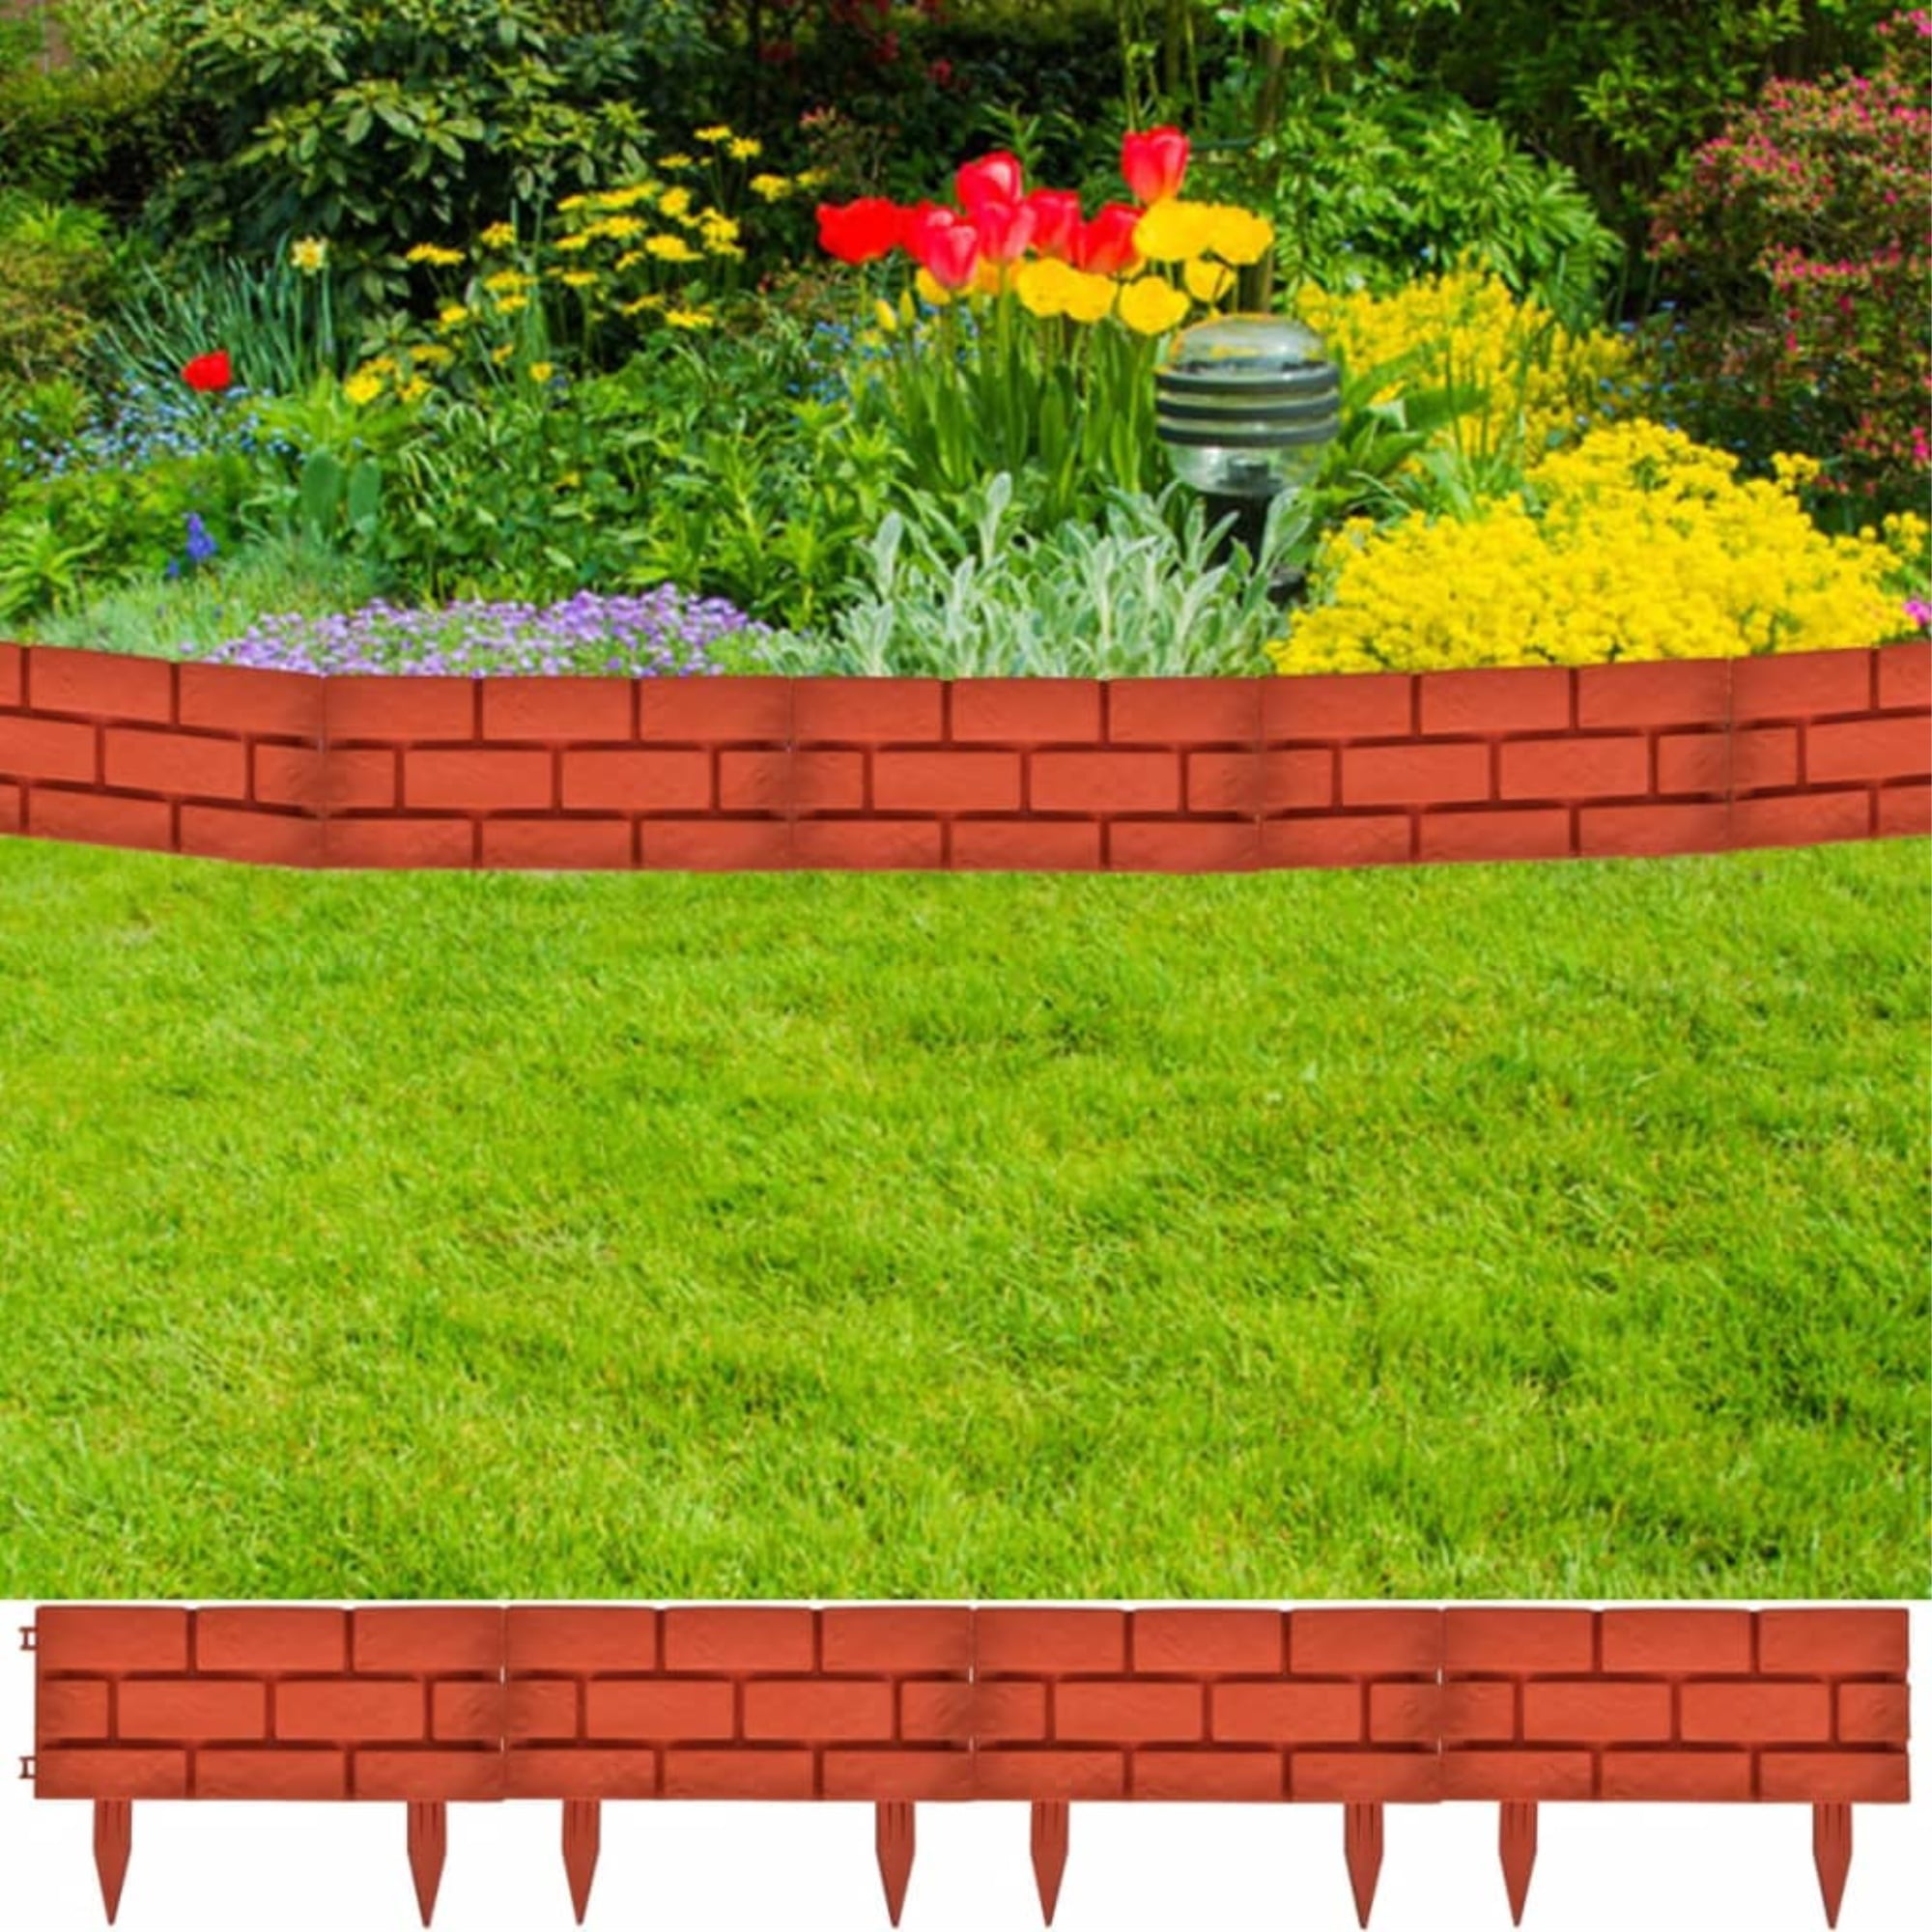 vidaXL Lawn Divider with Brick Design 11 pcs,Garden Edging BorderDecorative Flower Bed Edging for Landscaping Plastic Garden Fence Stone Trim Border 